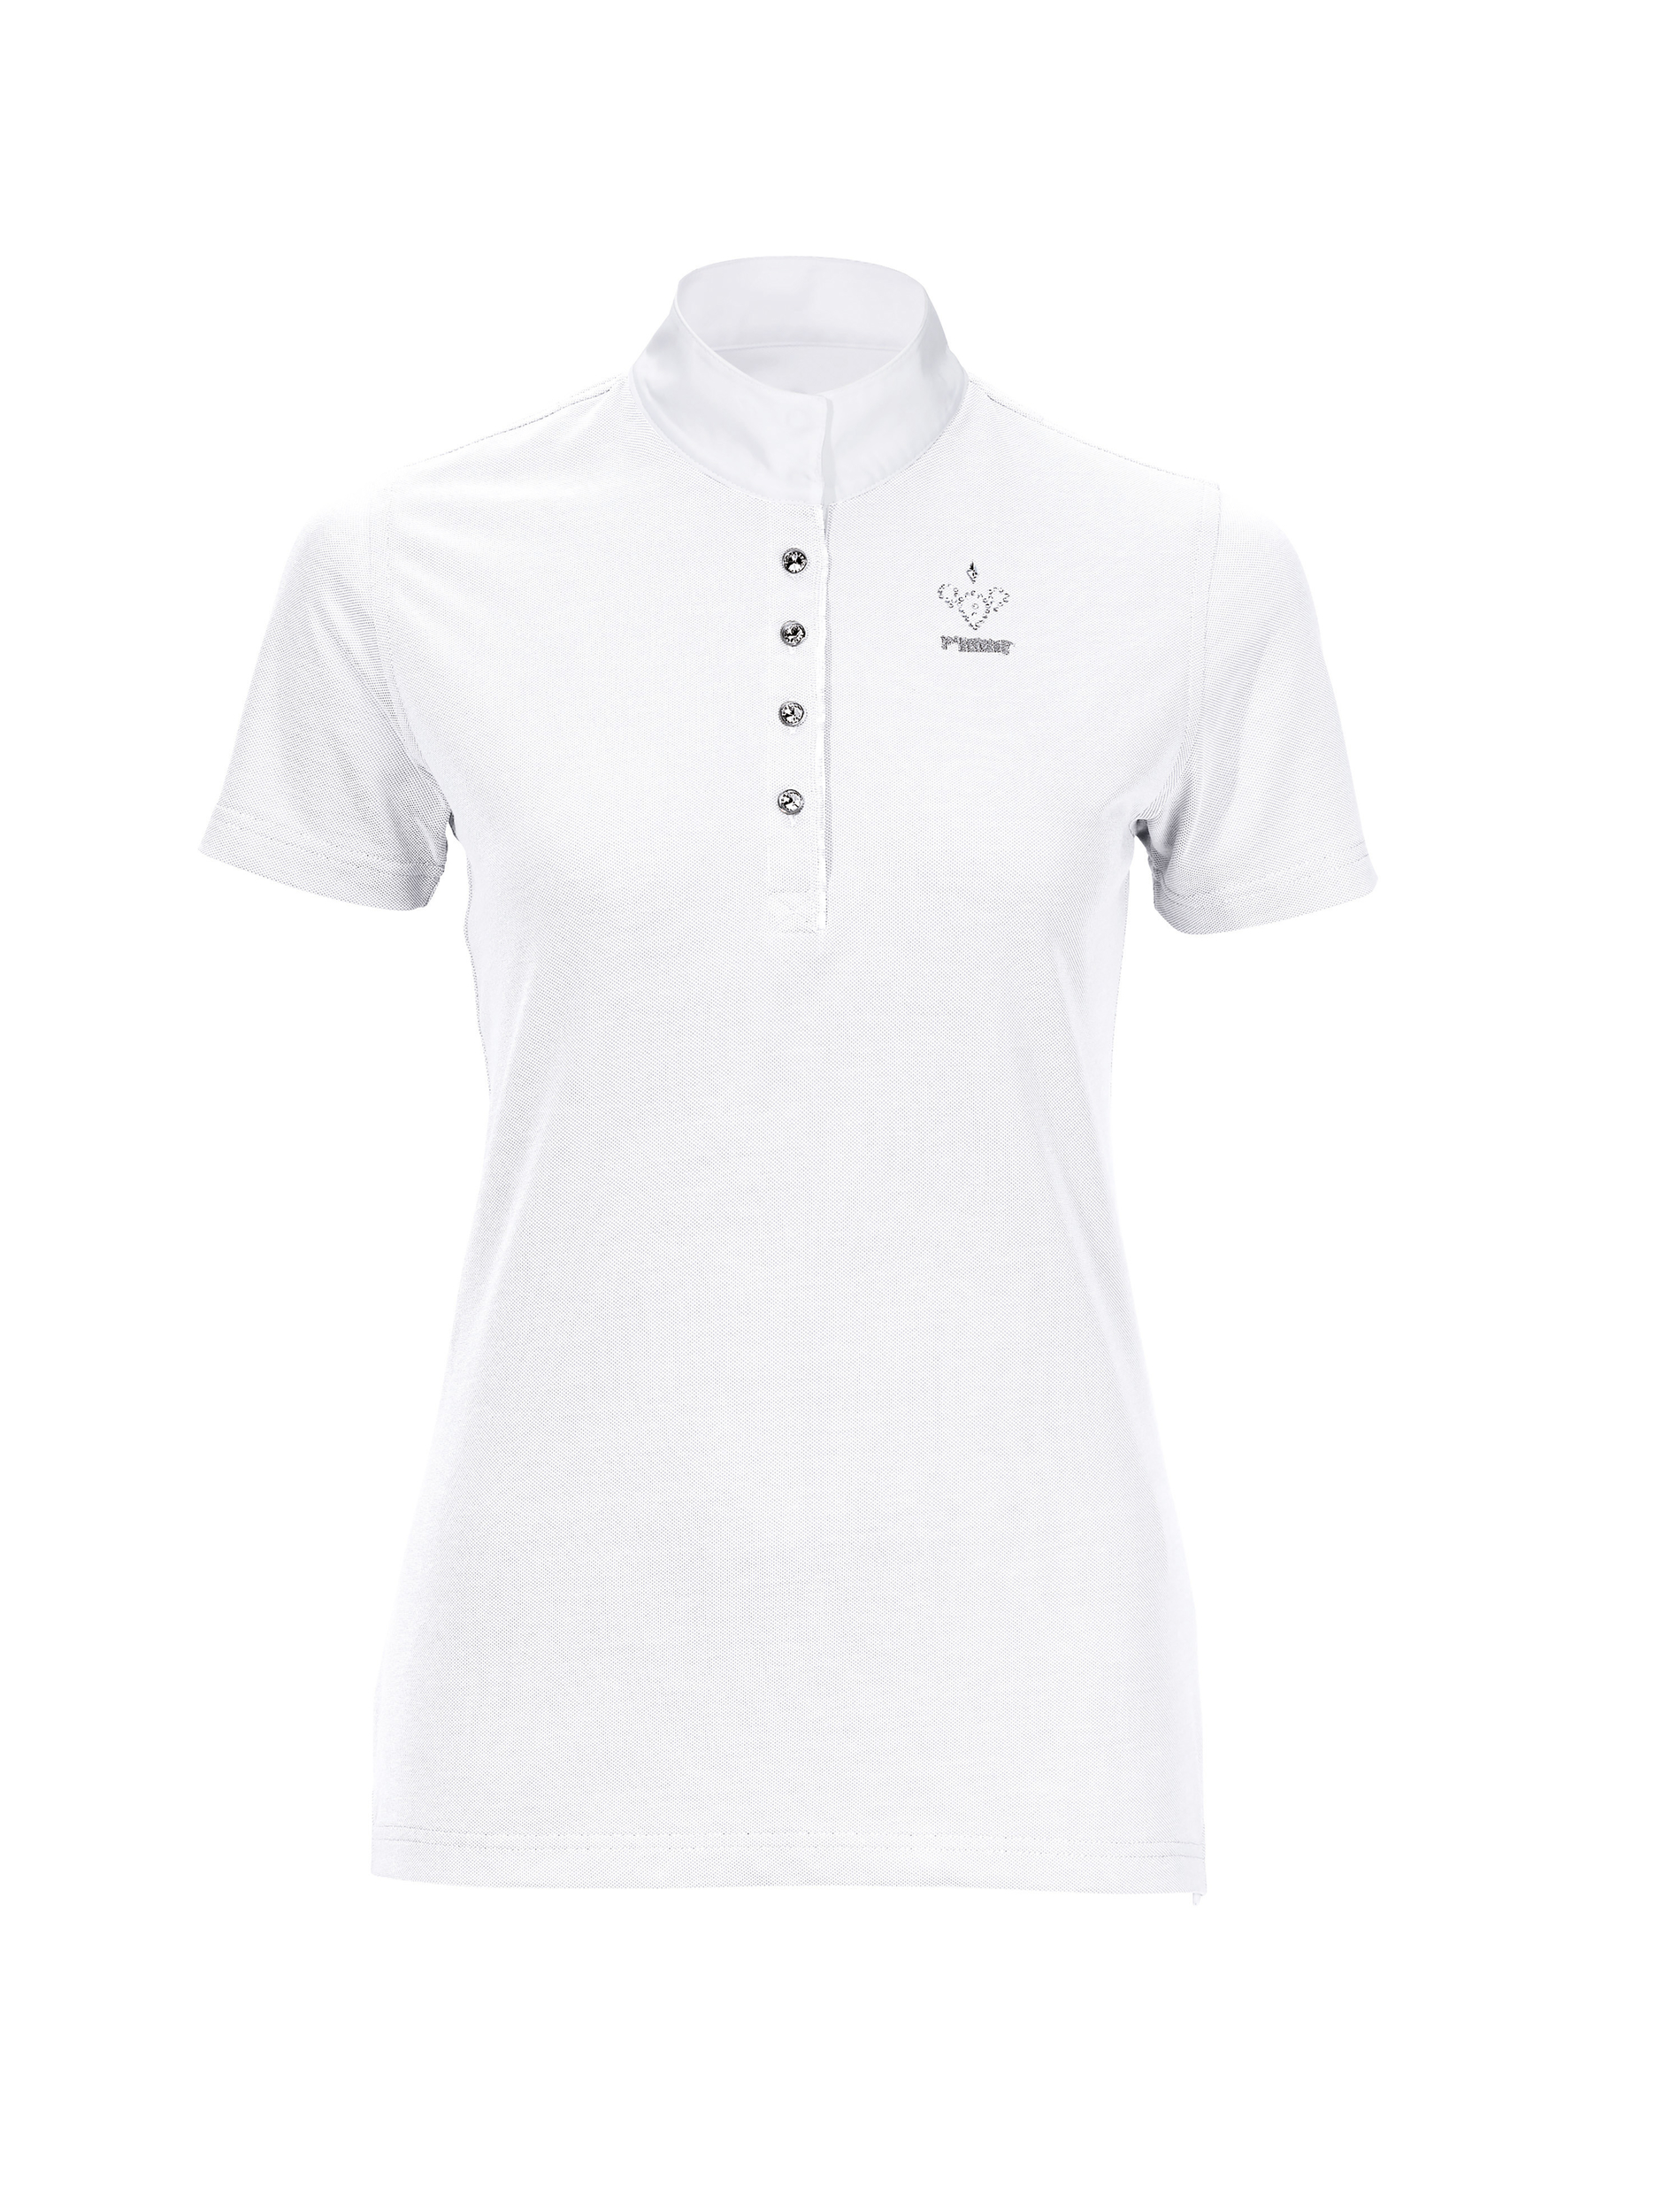 PIKEUR sportliches Damen kurzarm Turniershirt - white - 38